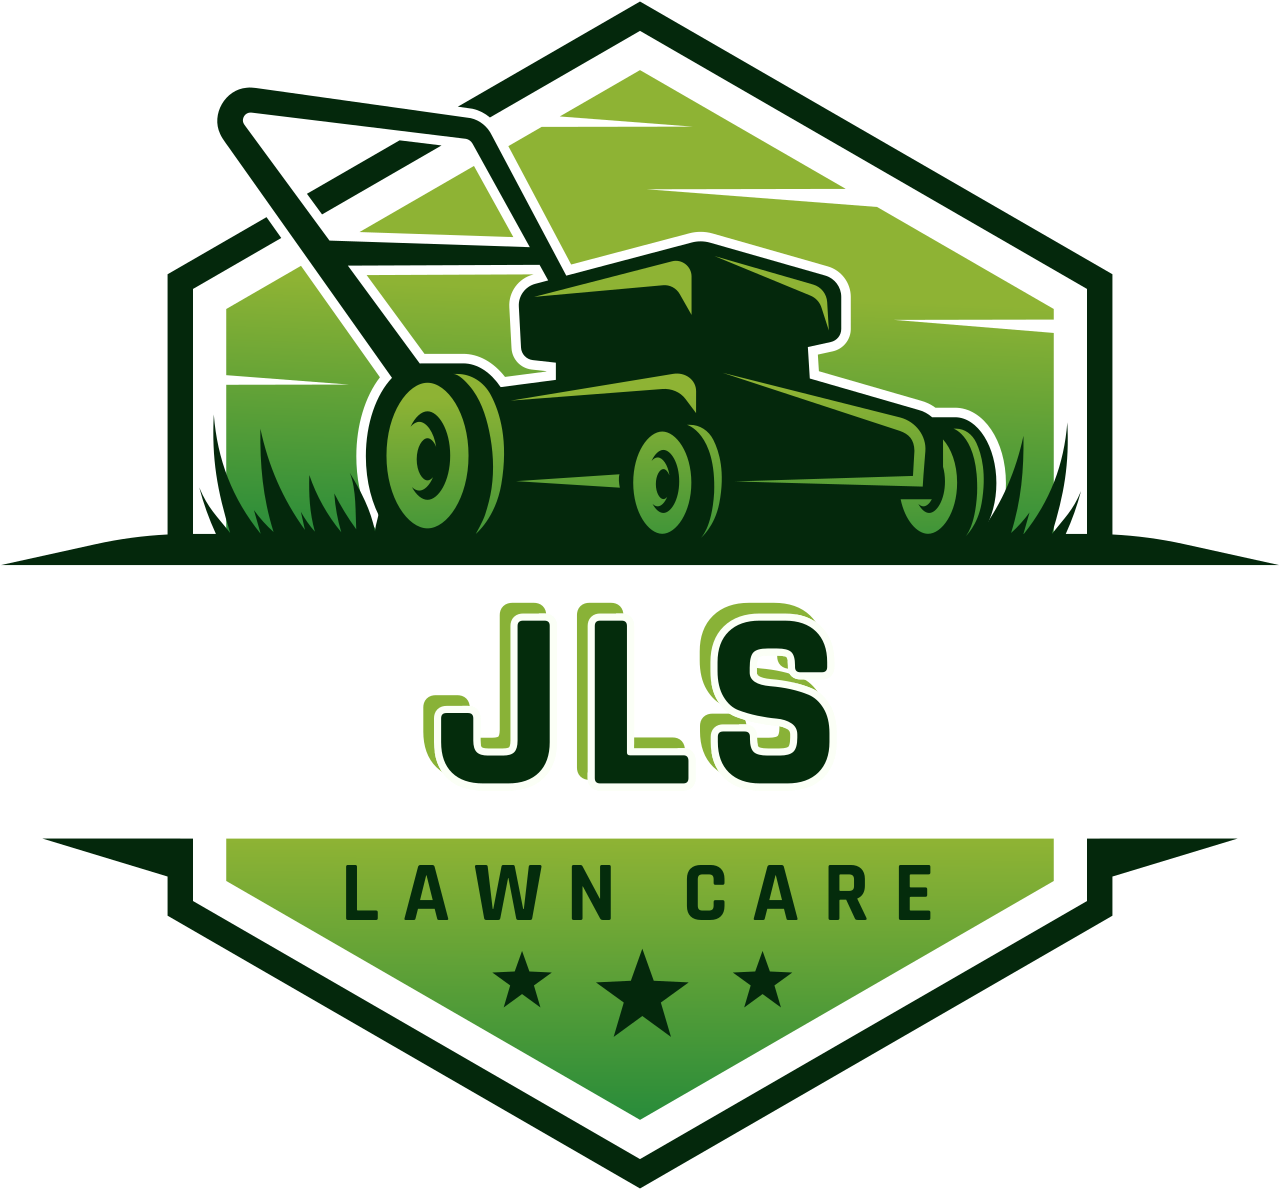 JLS's logo